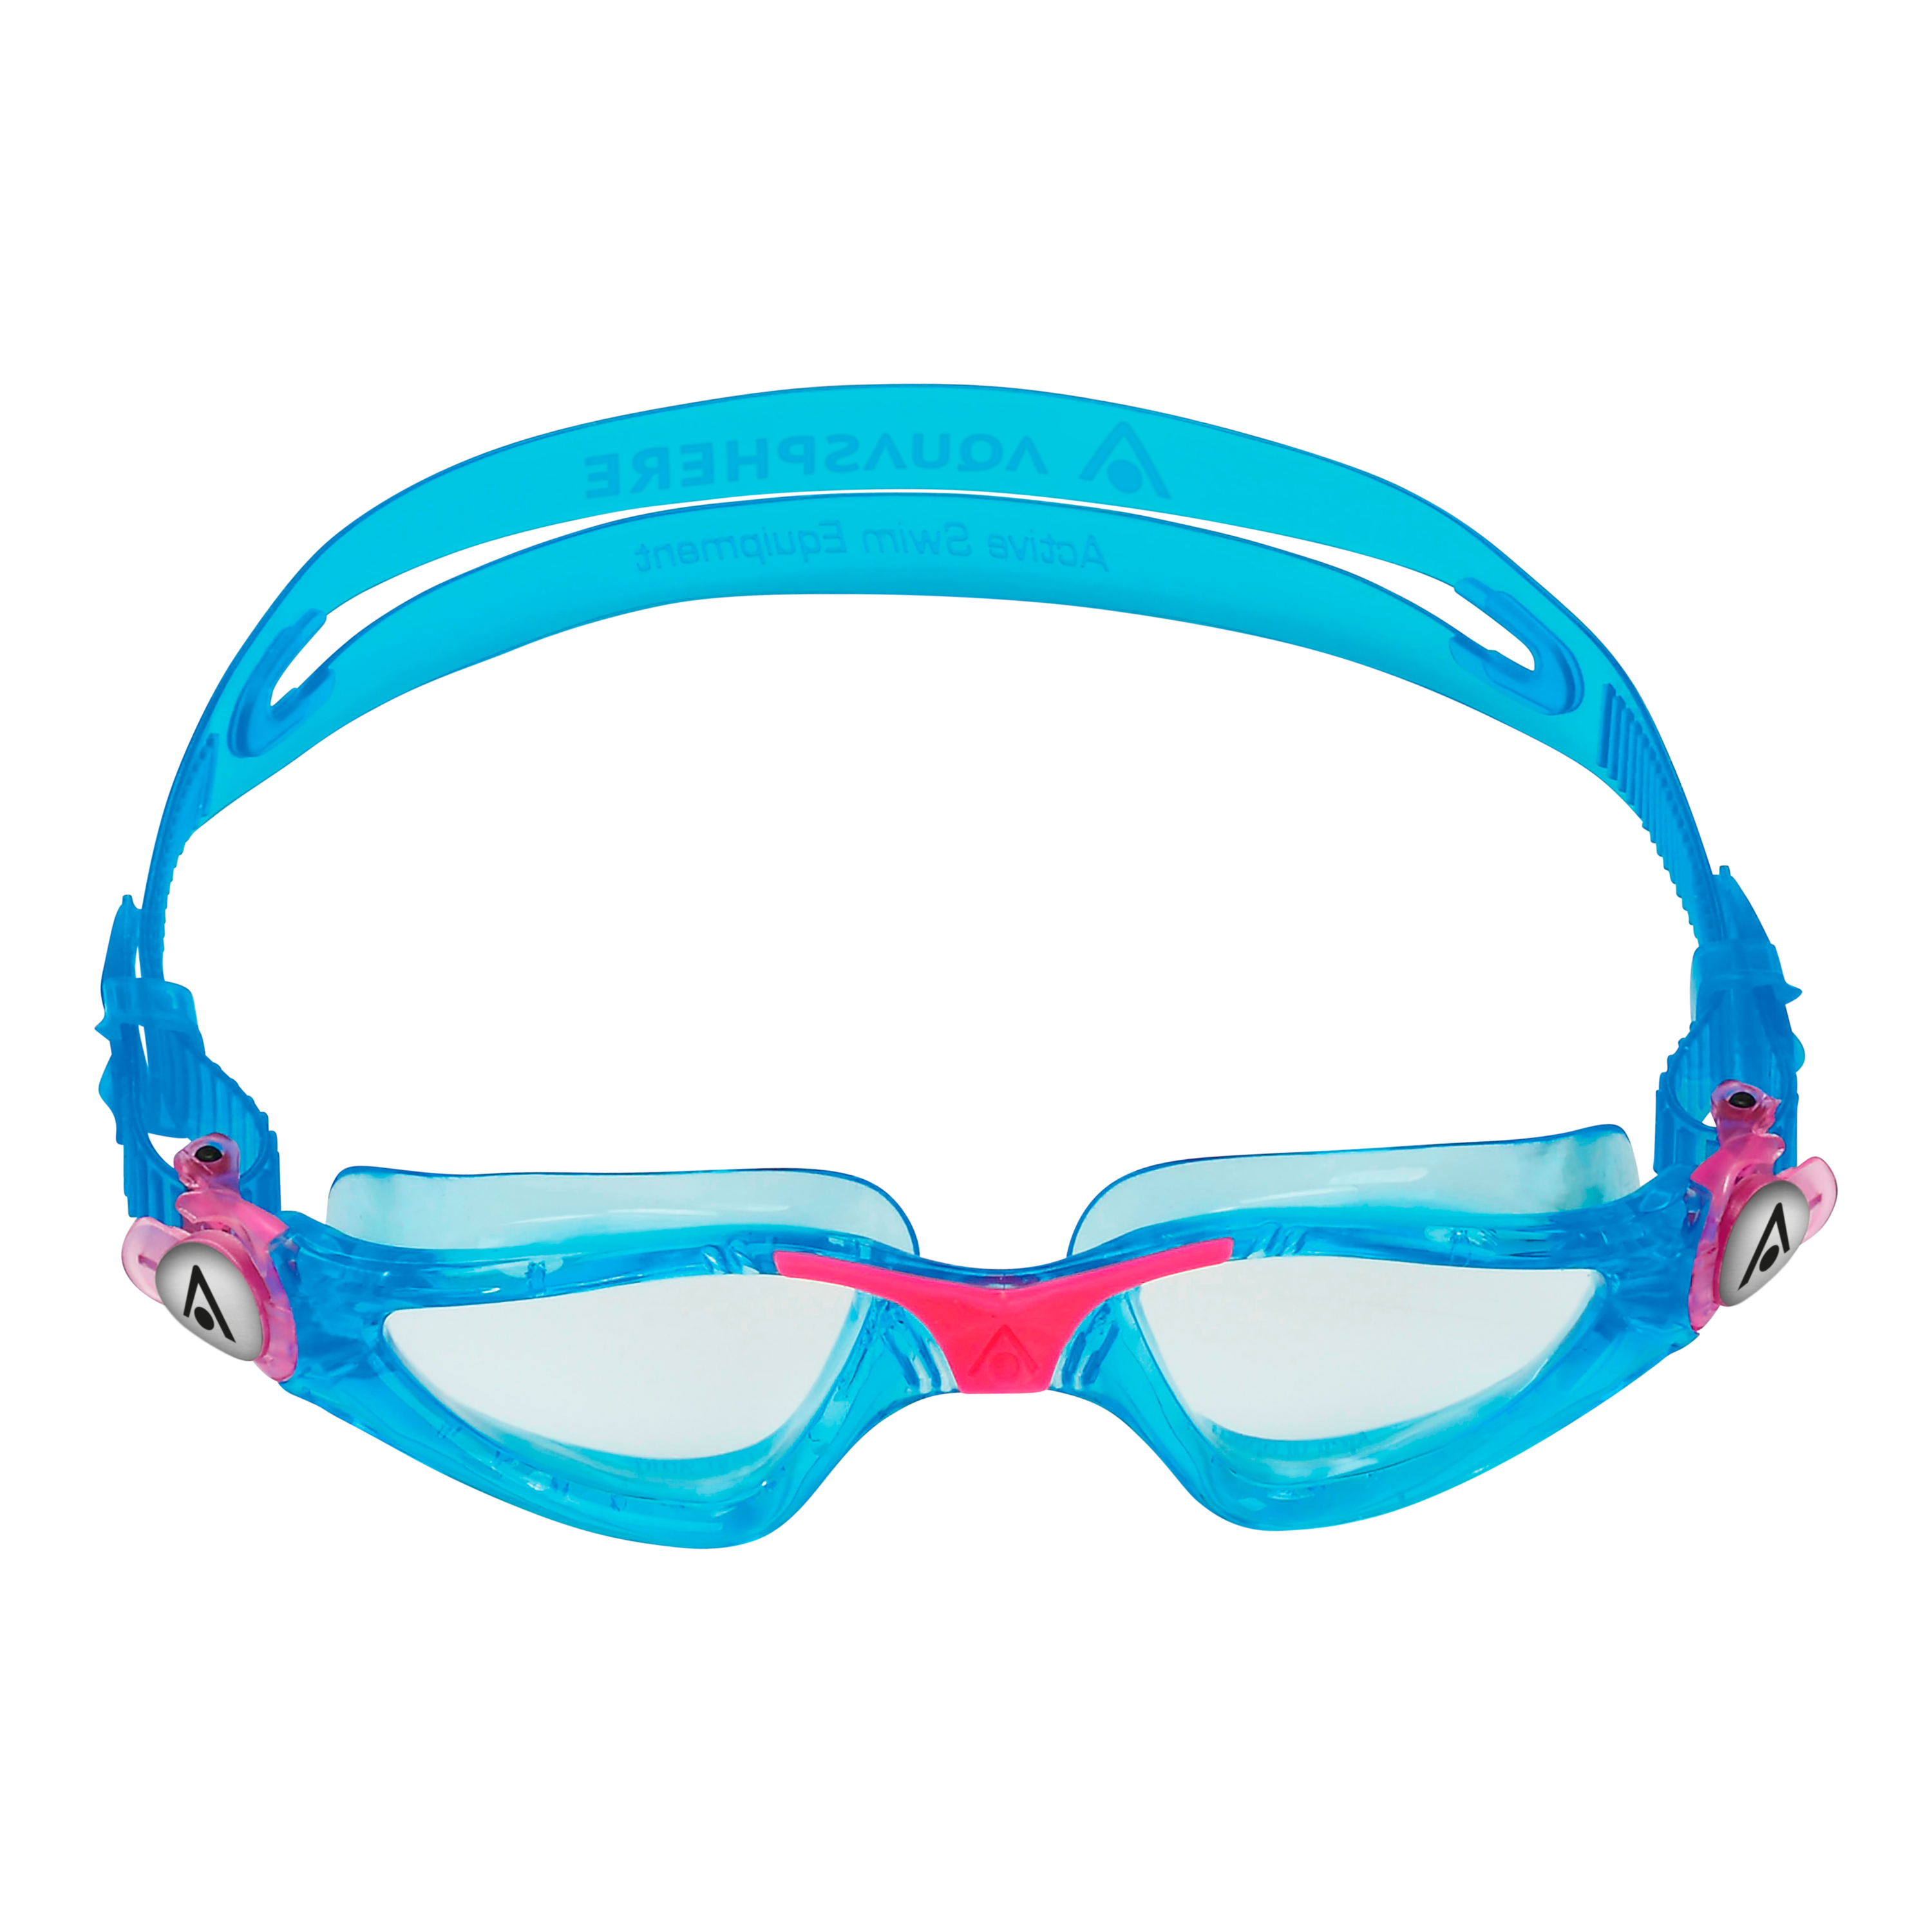 Aquasphere Kayenne Junior Goggles Clear Lenses NEW